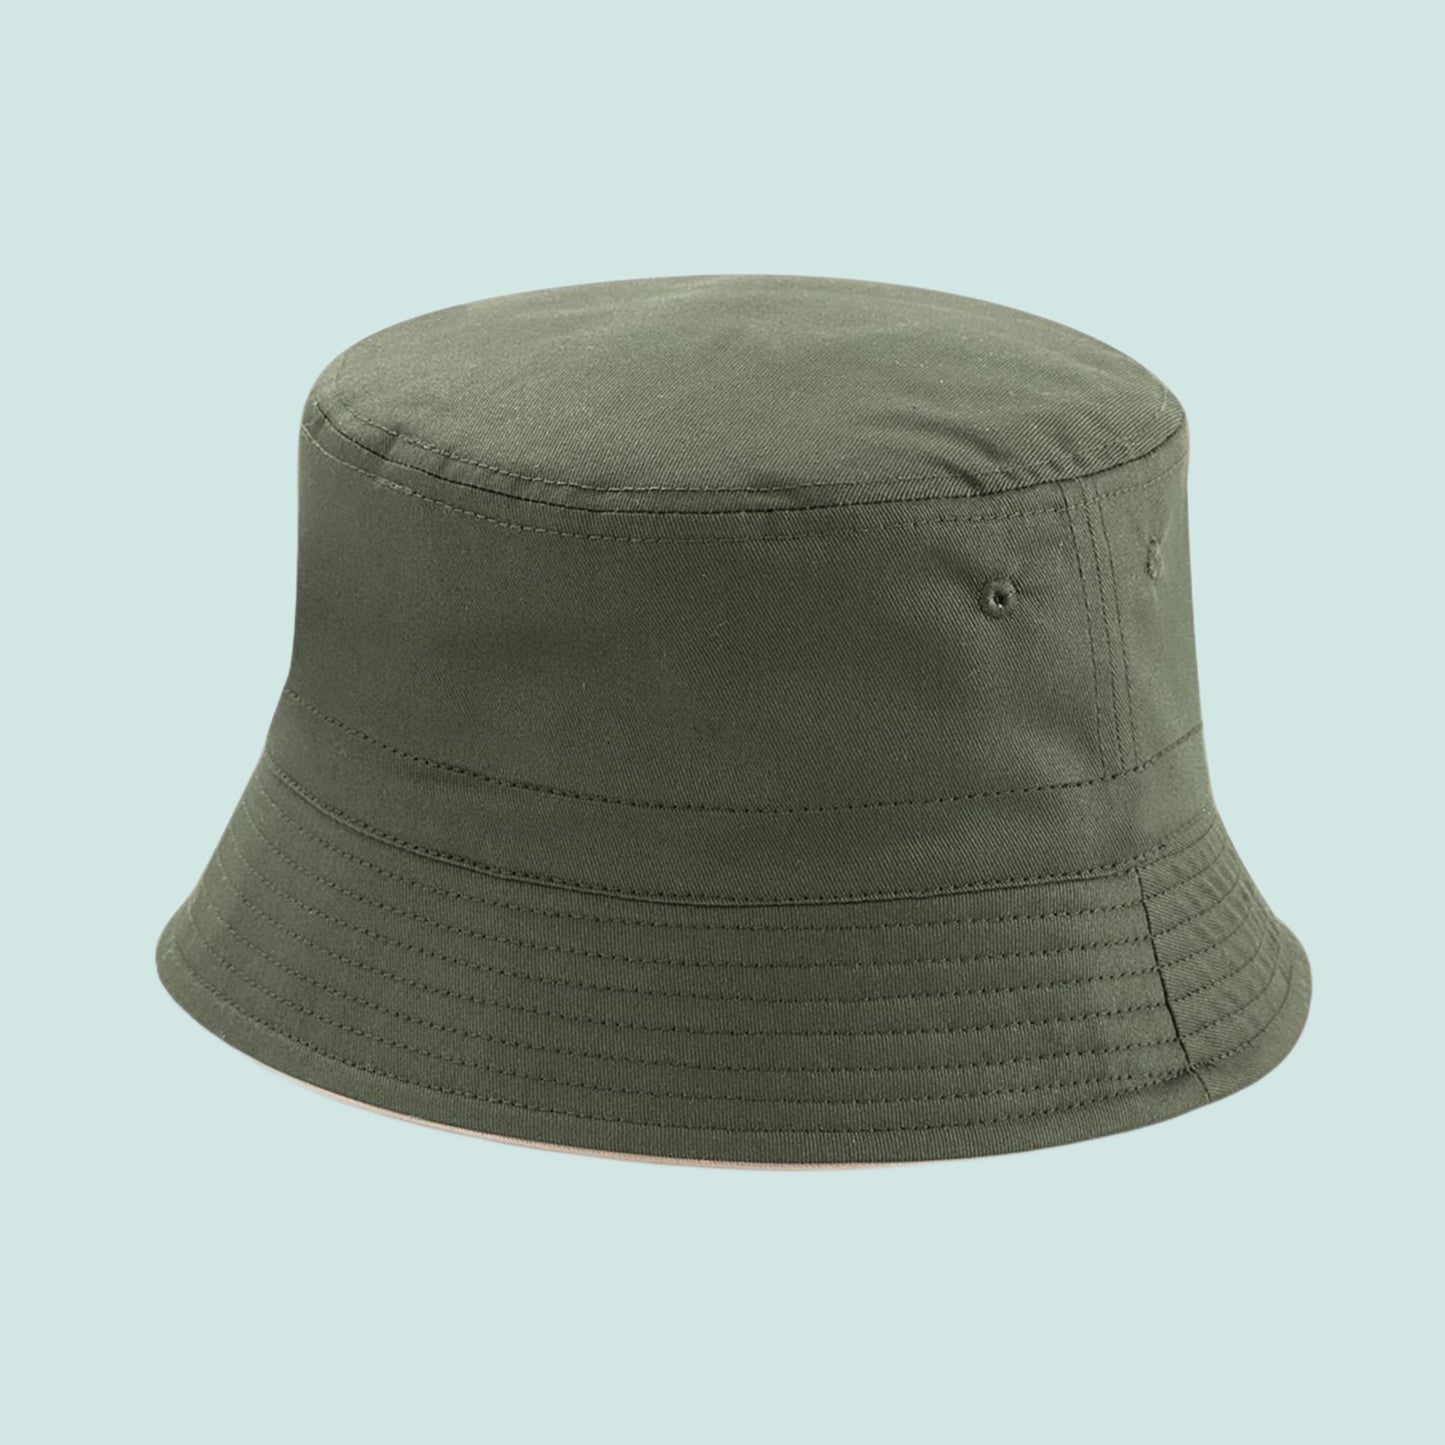 Olive UNDIVIDED Bucket Hat